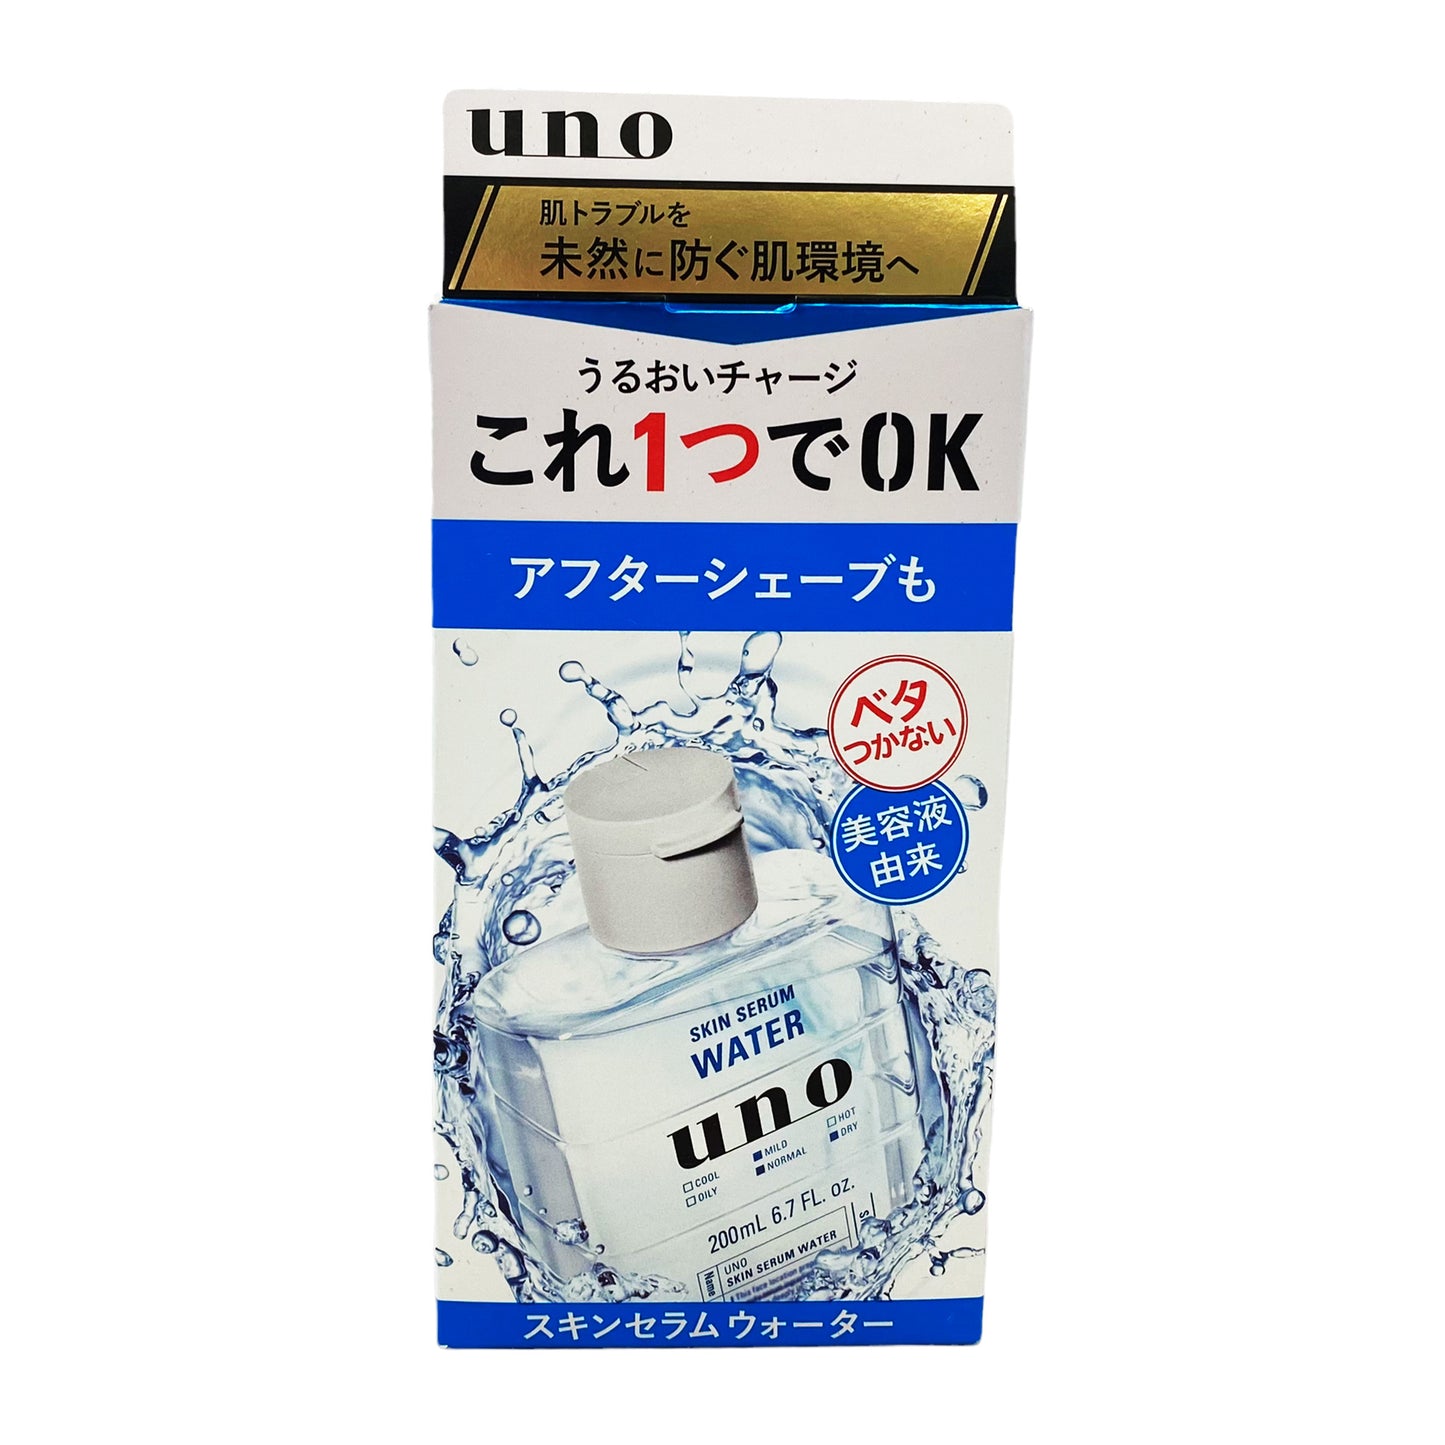 Front graphic view of Shiseido Uno Skin Serum Water 6.7oz (200ml)